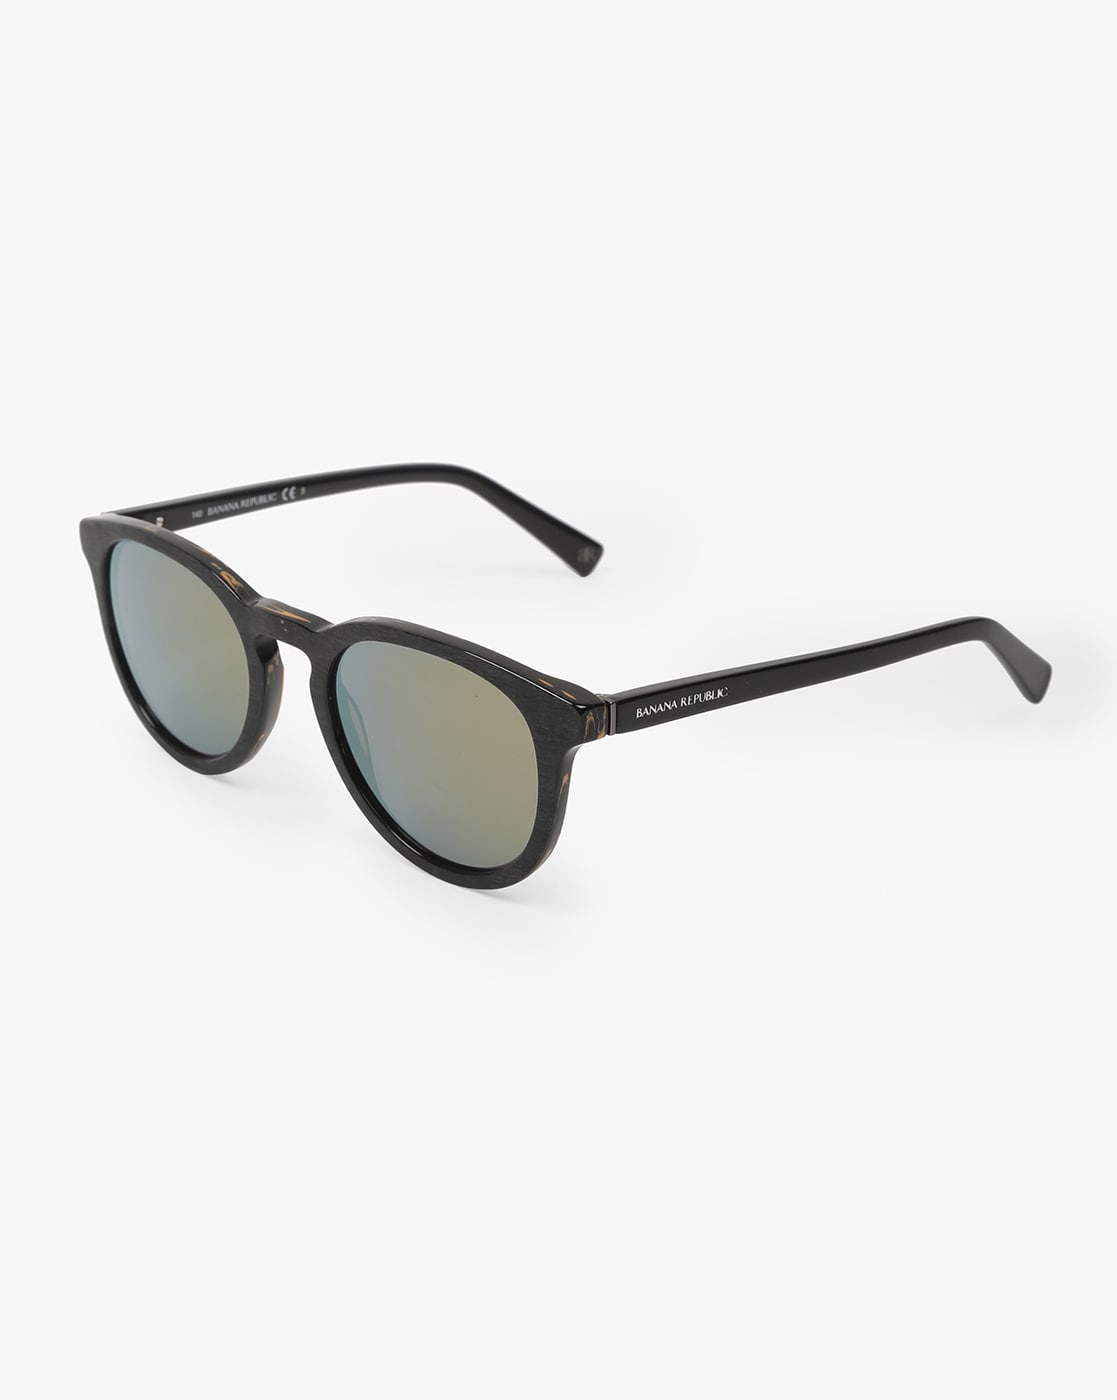 Buy Black Sunglasses for Men by BANANA REPUBLIC Online